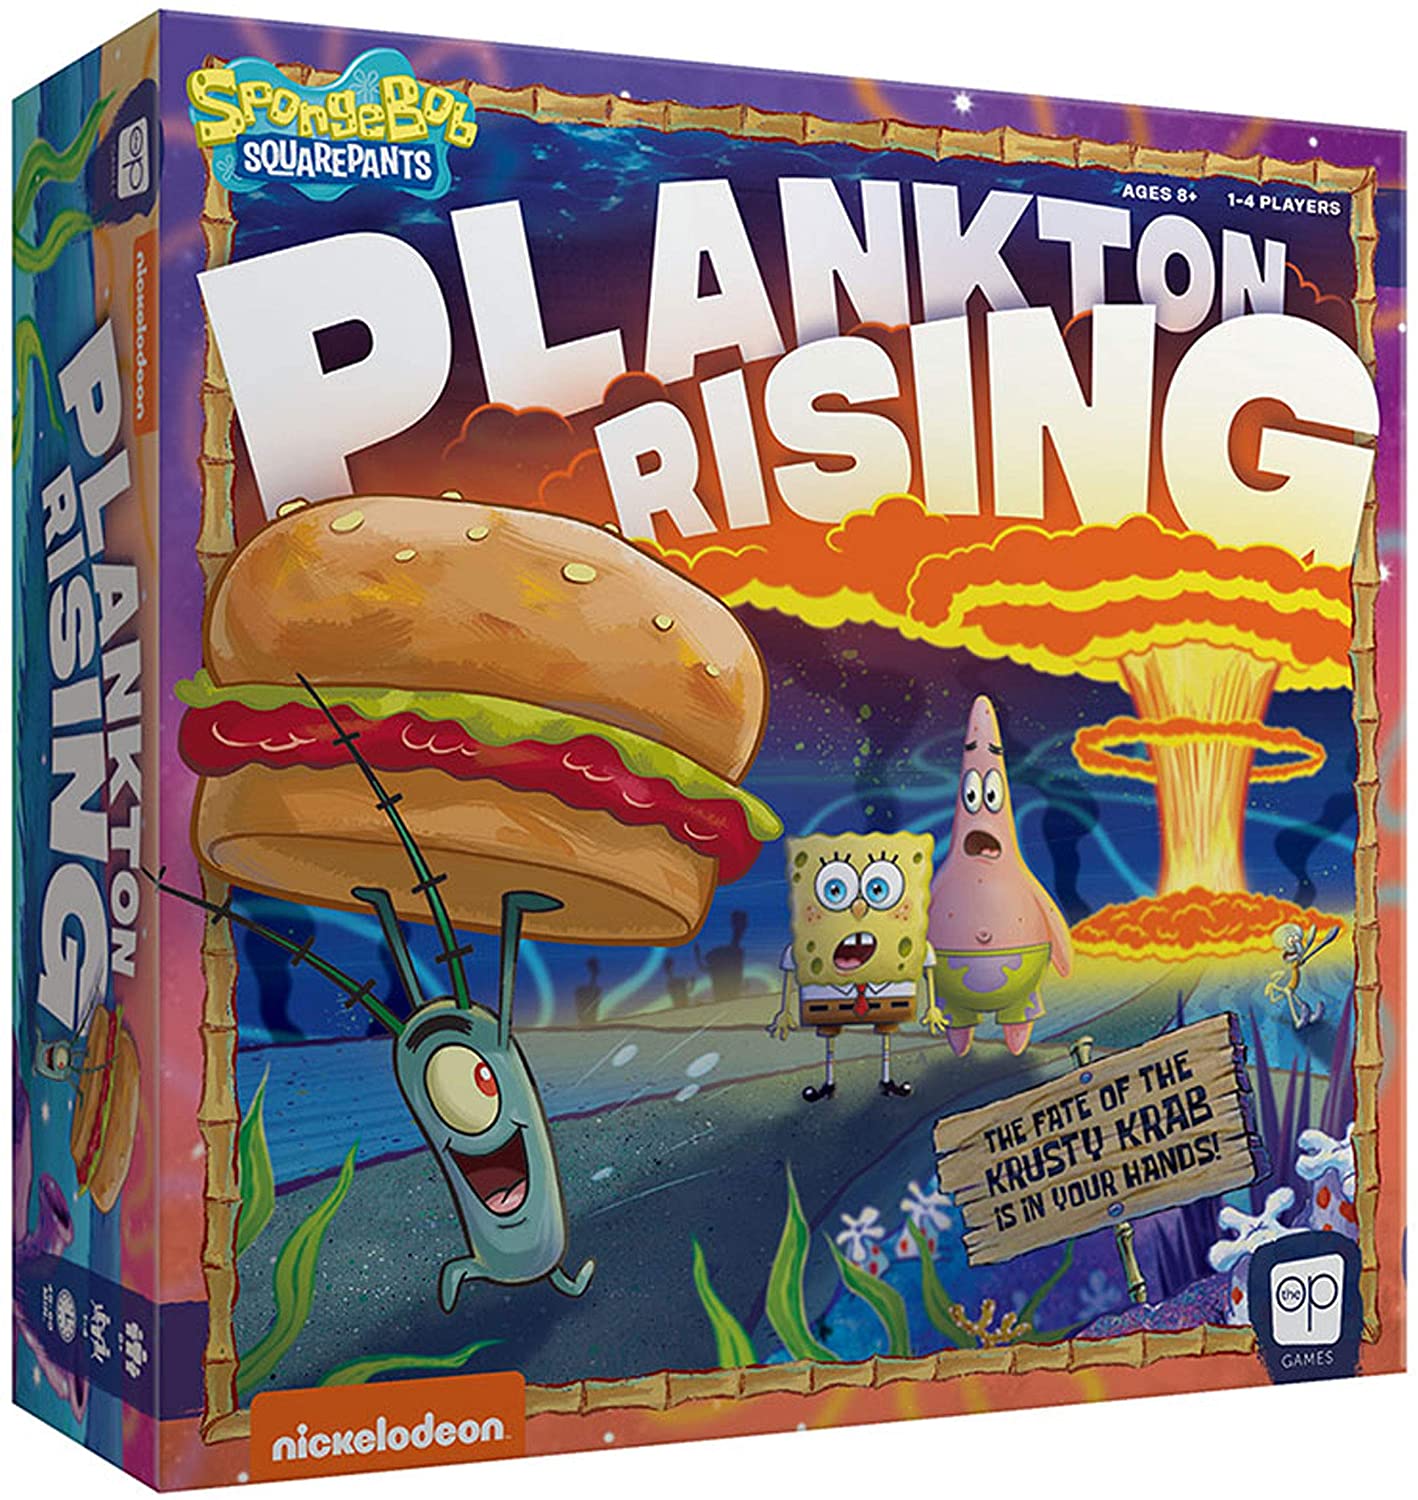 Spongebob Squarepants: Plankton Rising